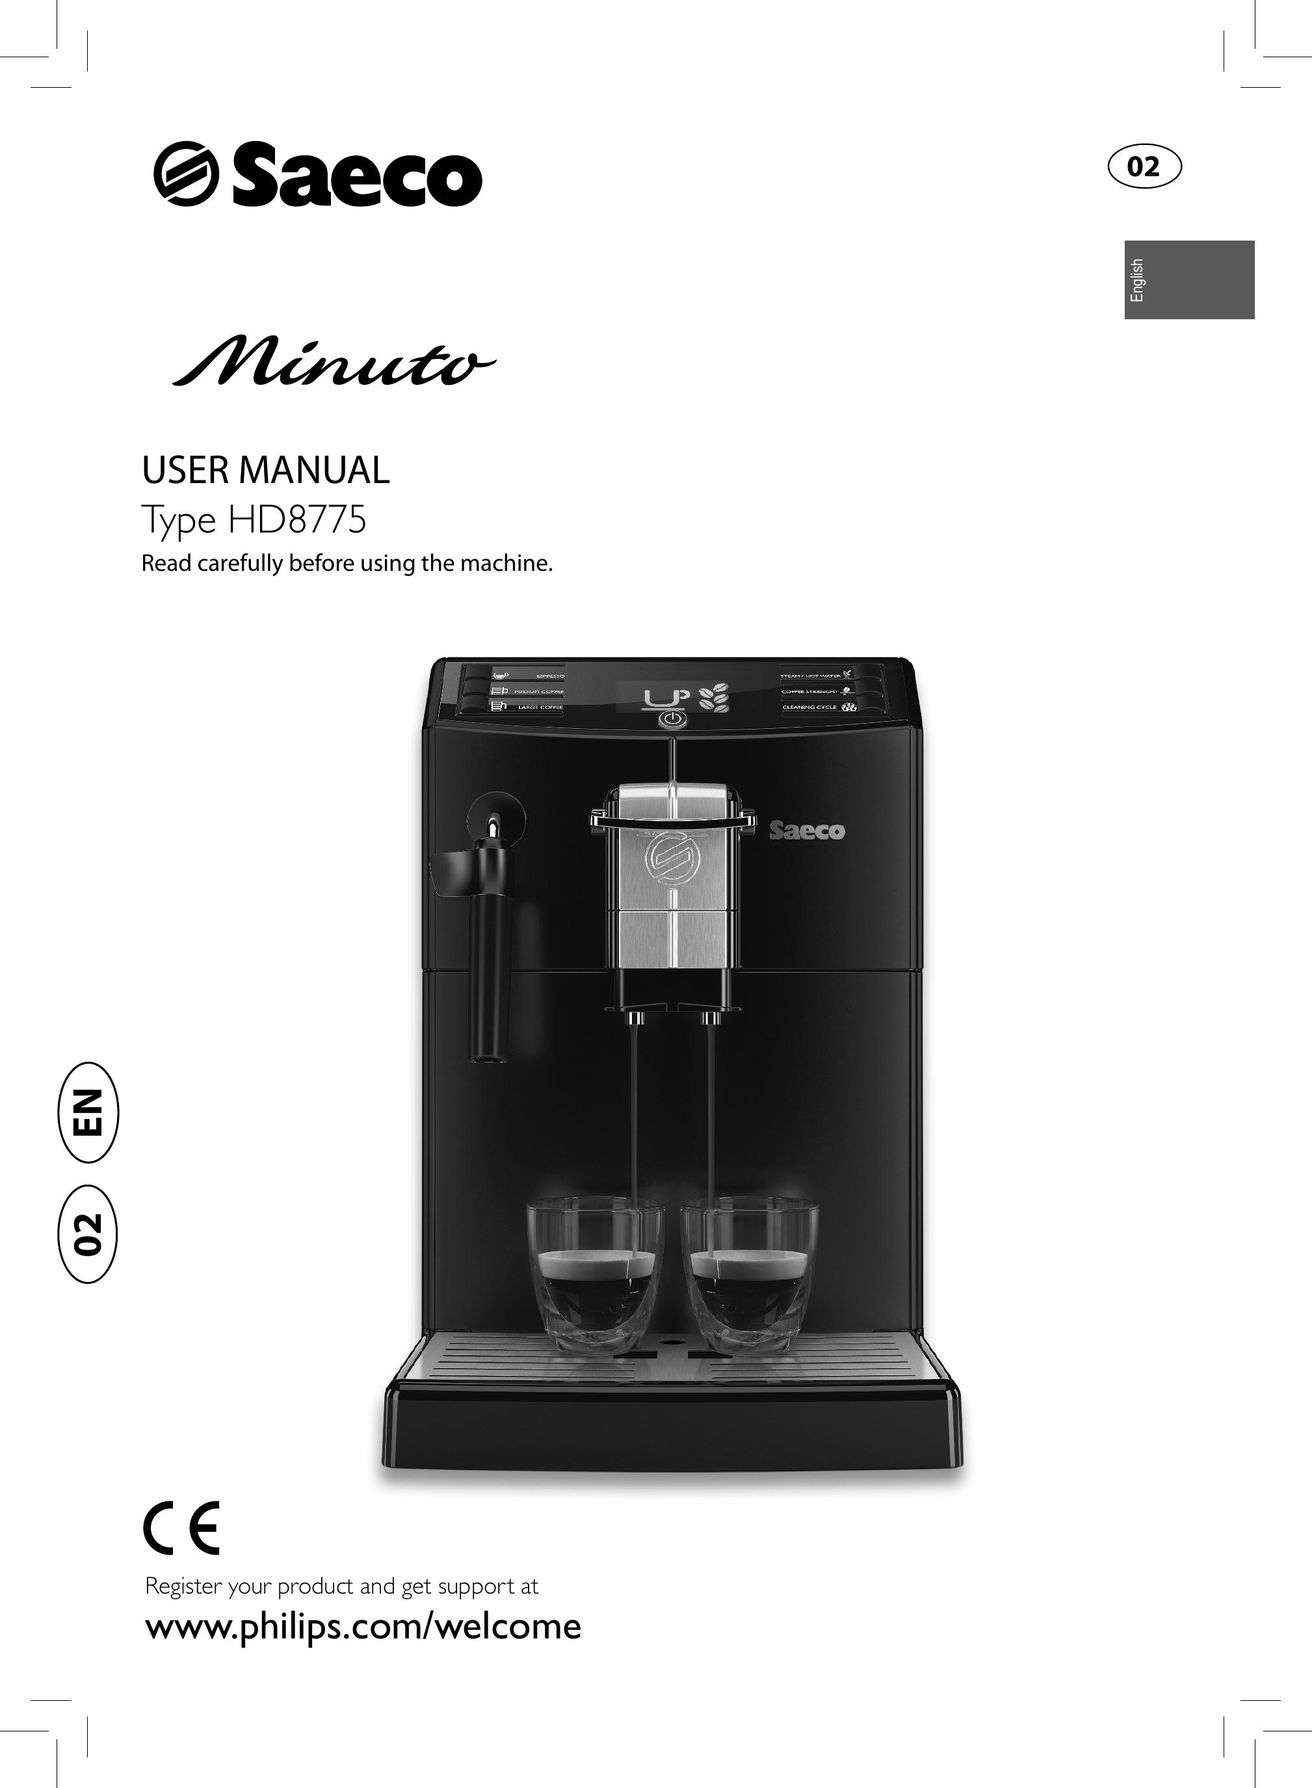 Saeco Coffee Makers HD8775 Coffeemaker User Manual